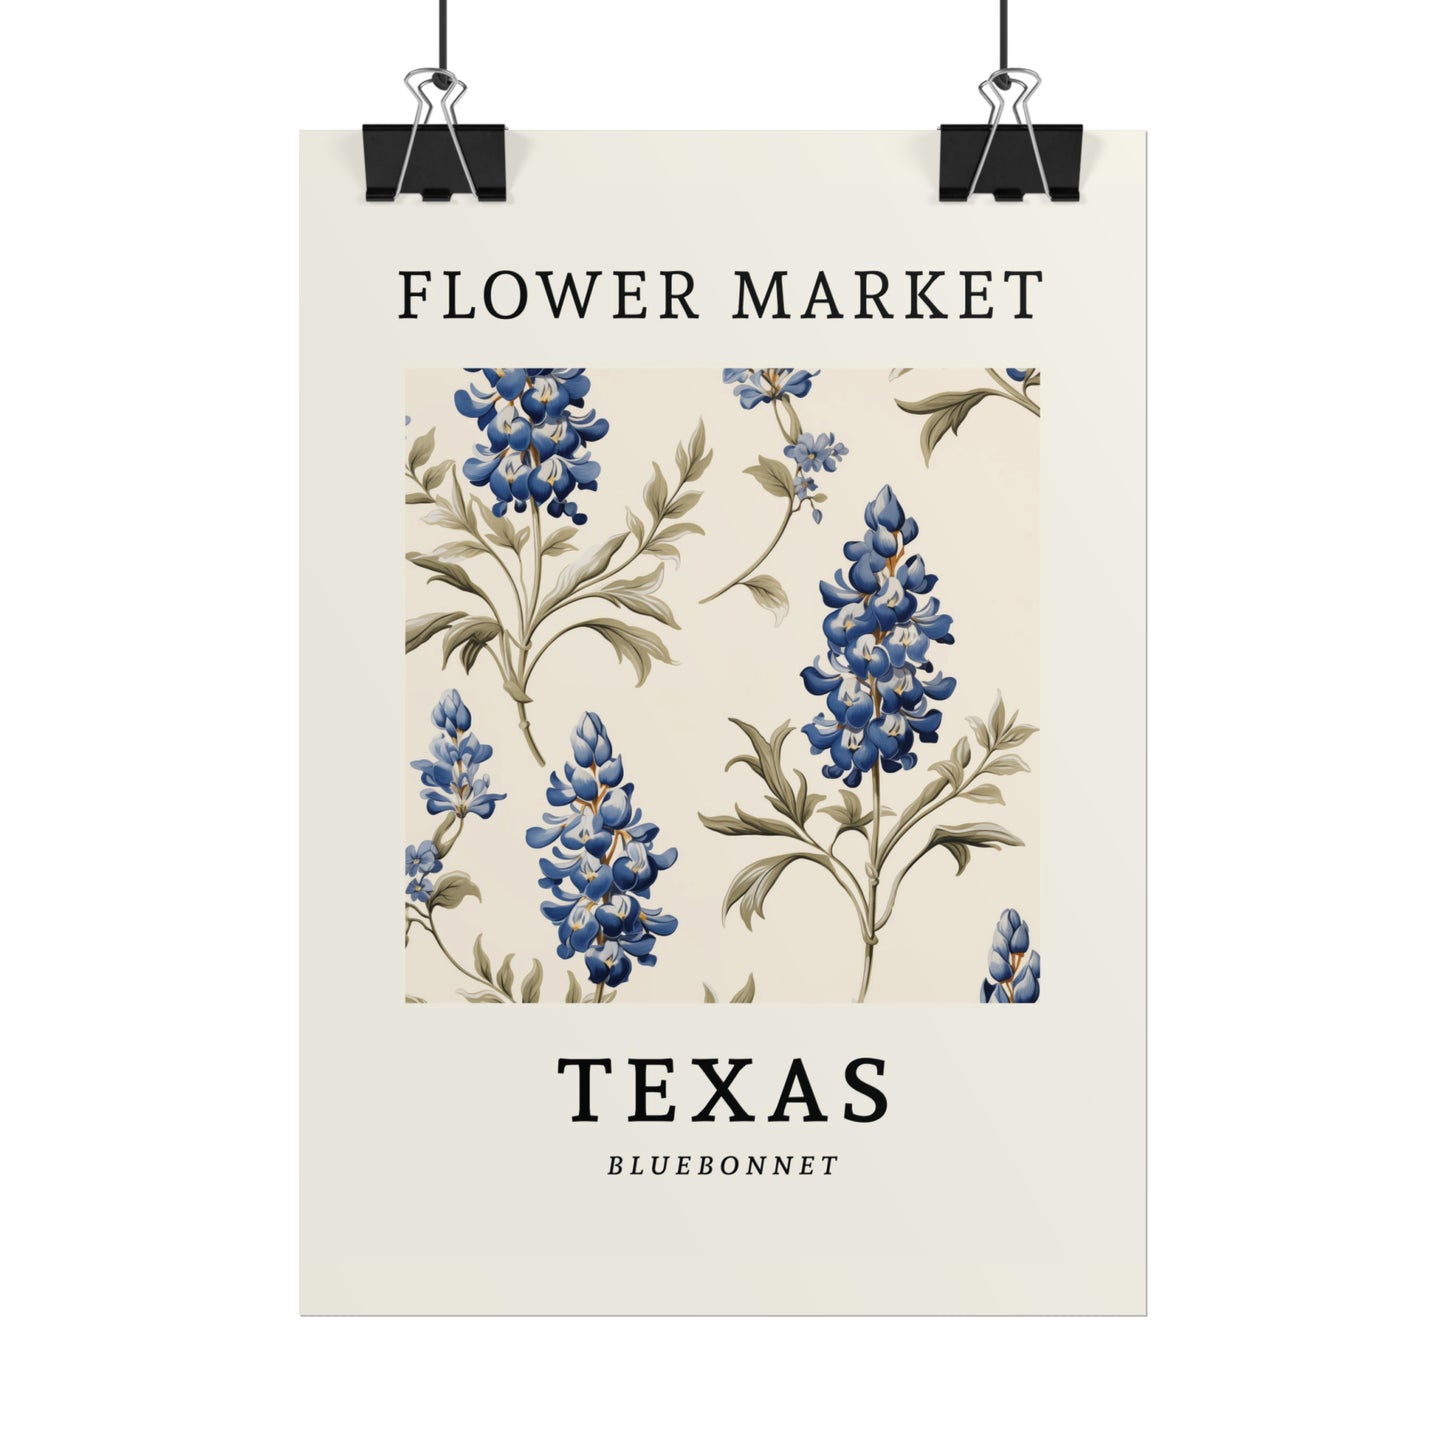 TEXAS FLOWER MARKET Poster Bluebonnet State Flower Print